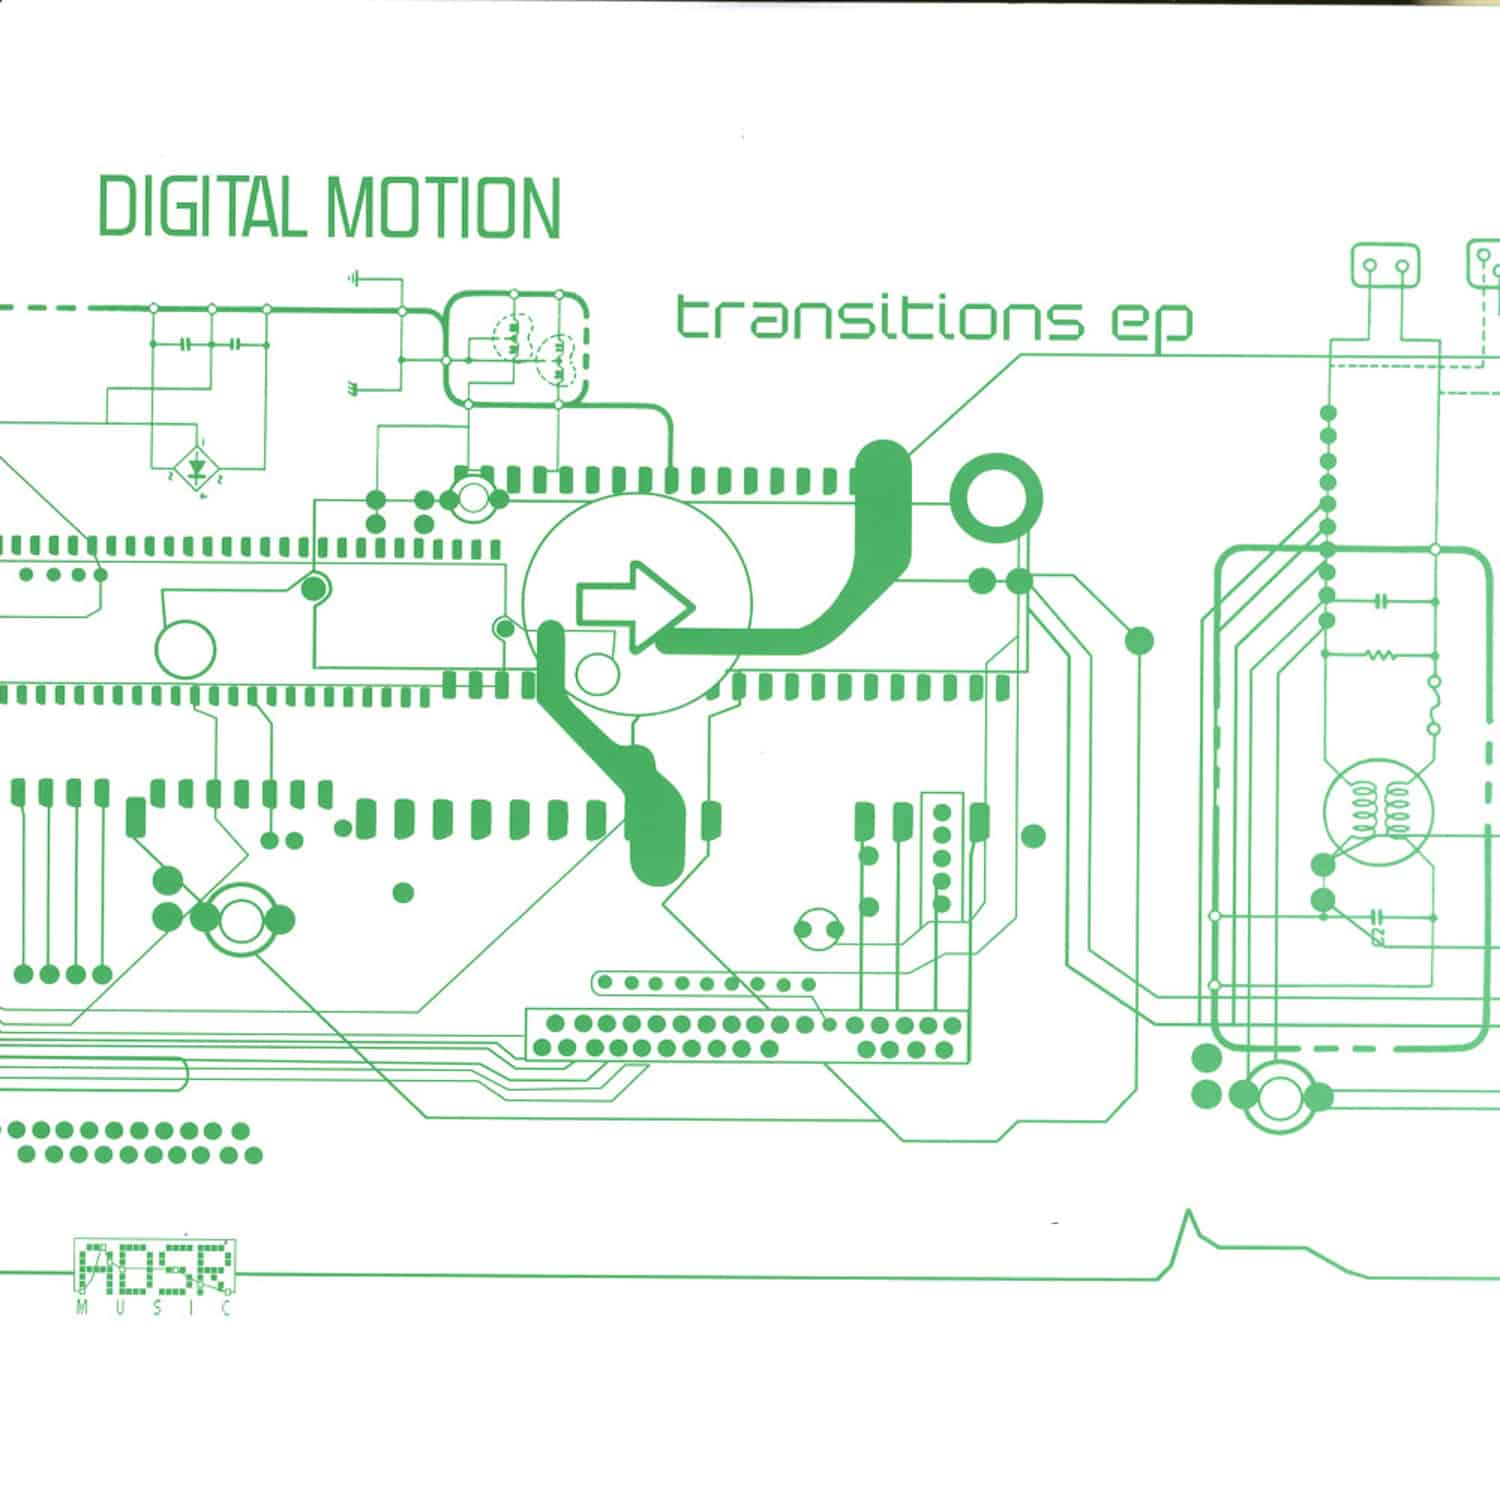 Digital Motion - TRANSITIONS EP